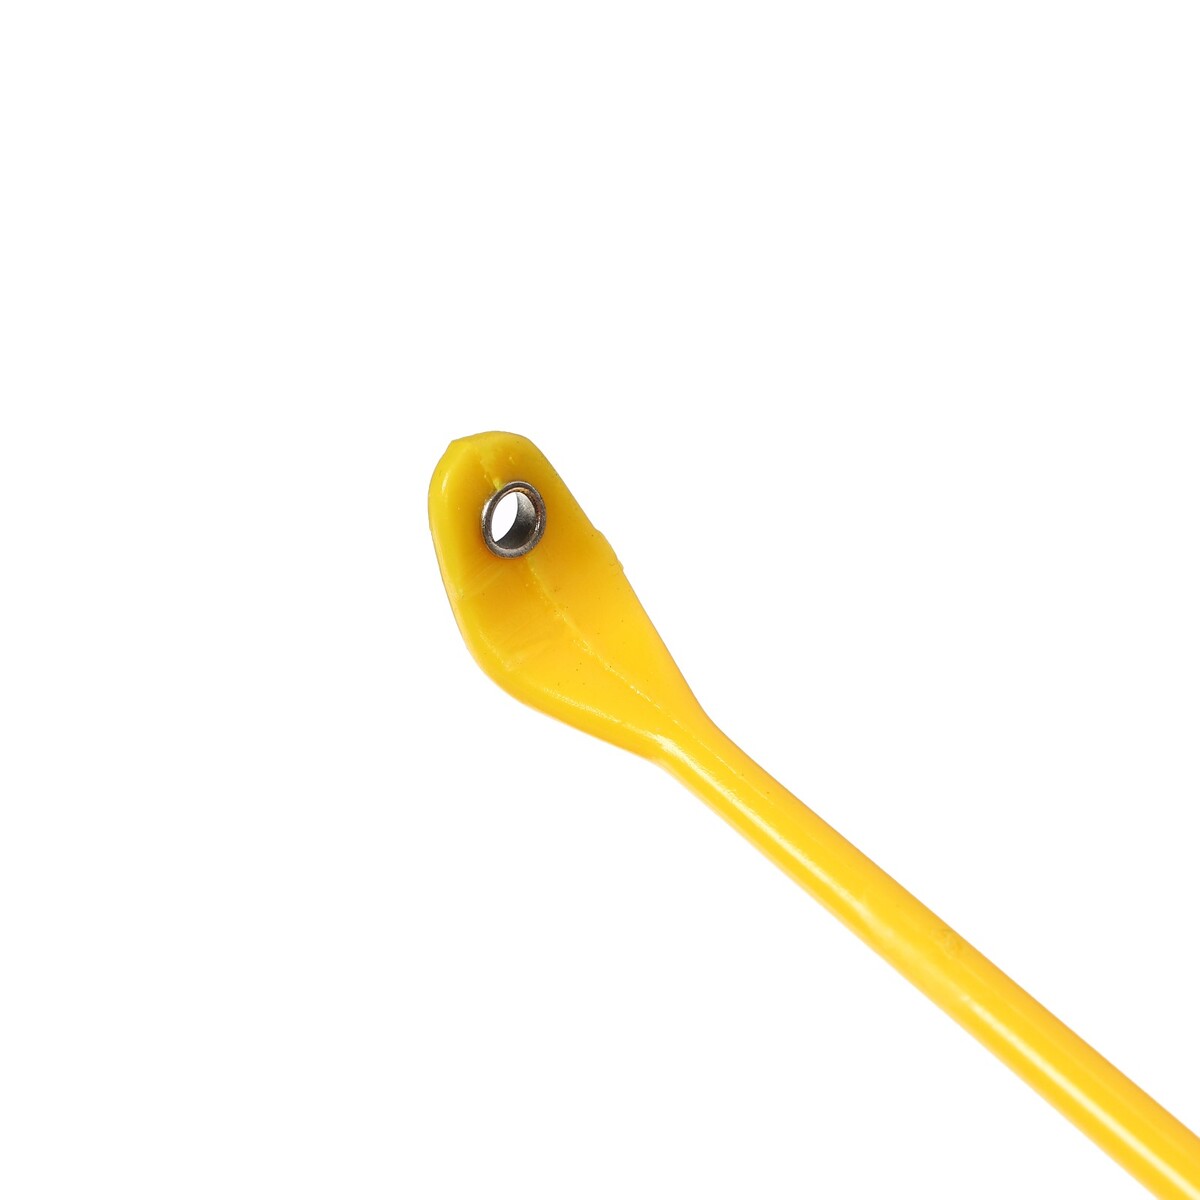 фото Удочка зимняя, ручка неопрен, диаметр катушки 7.5 см, hfb-2f no brand